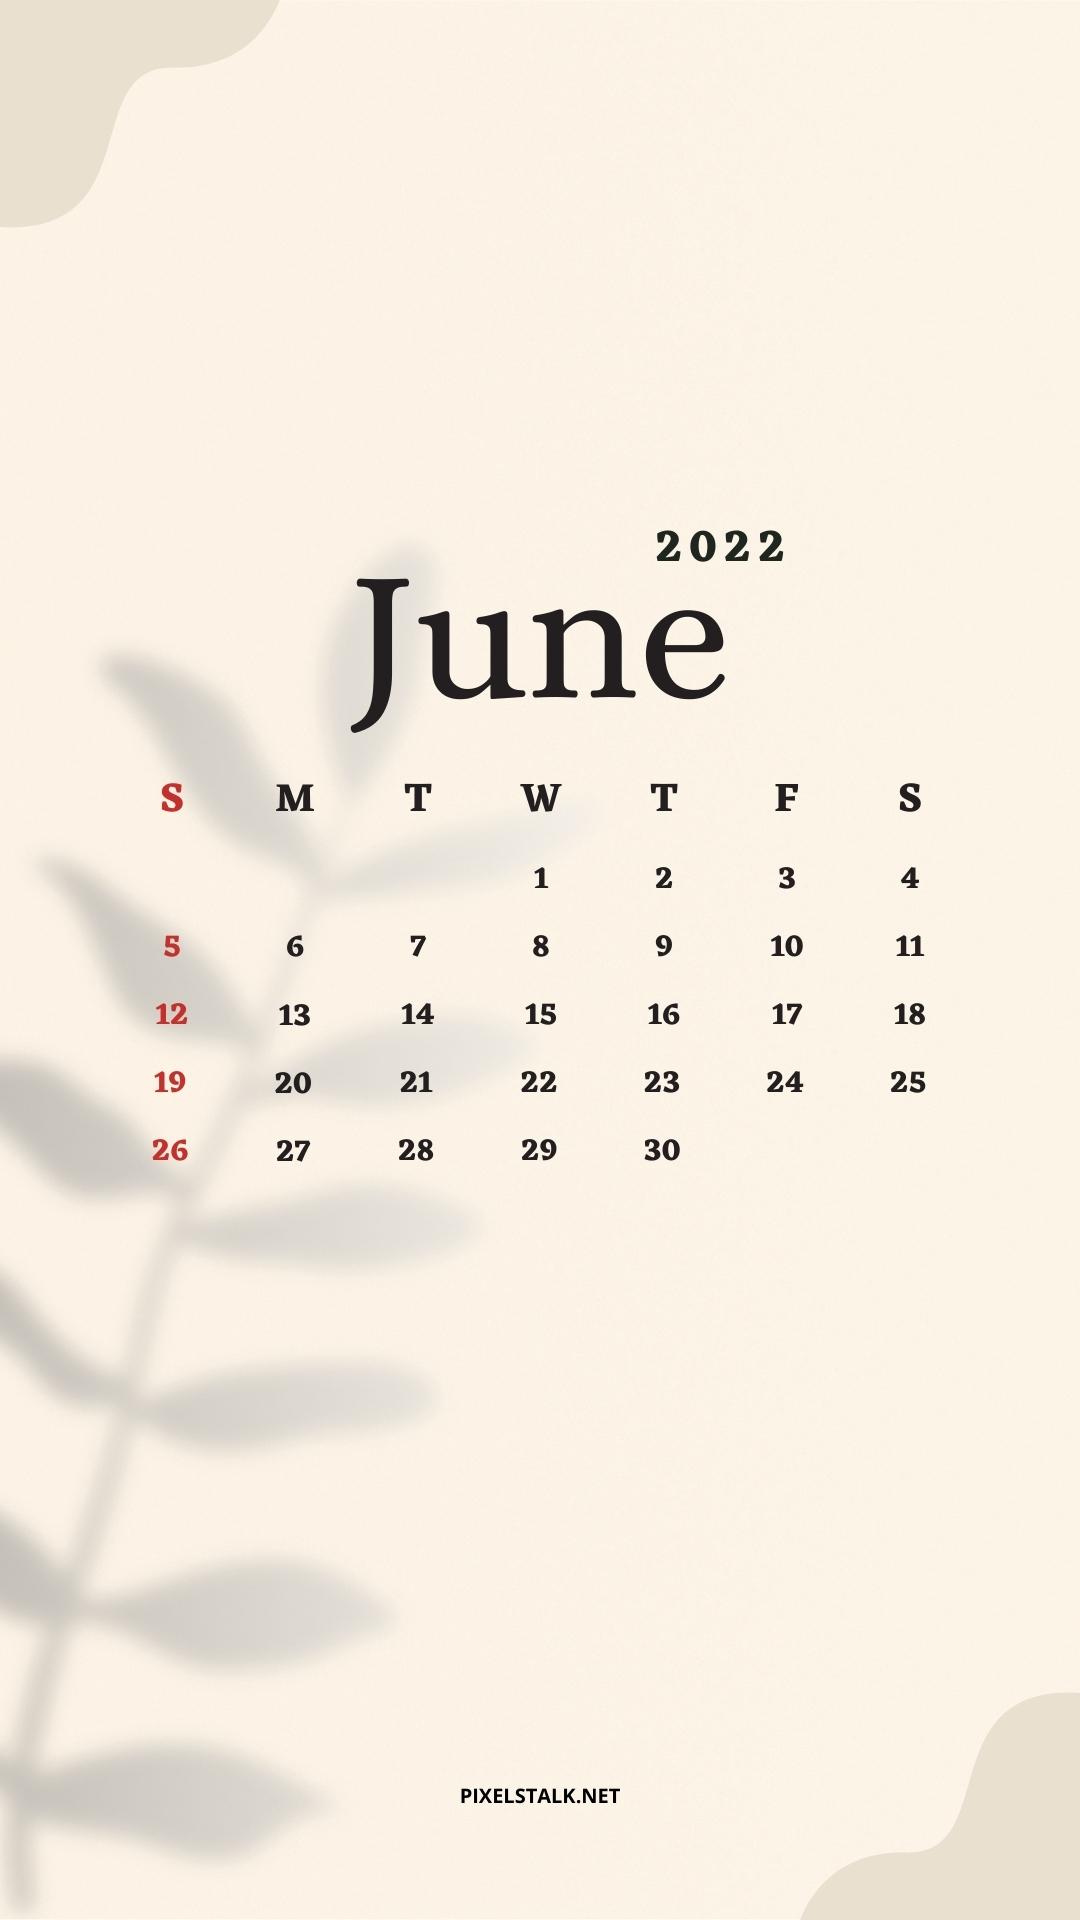 June 2022 Calendar iPhone Wallpapers HD